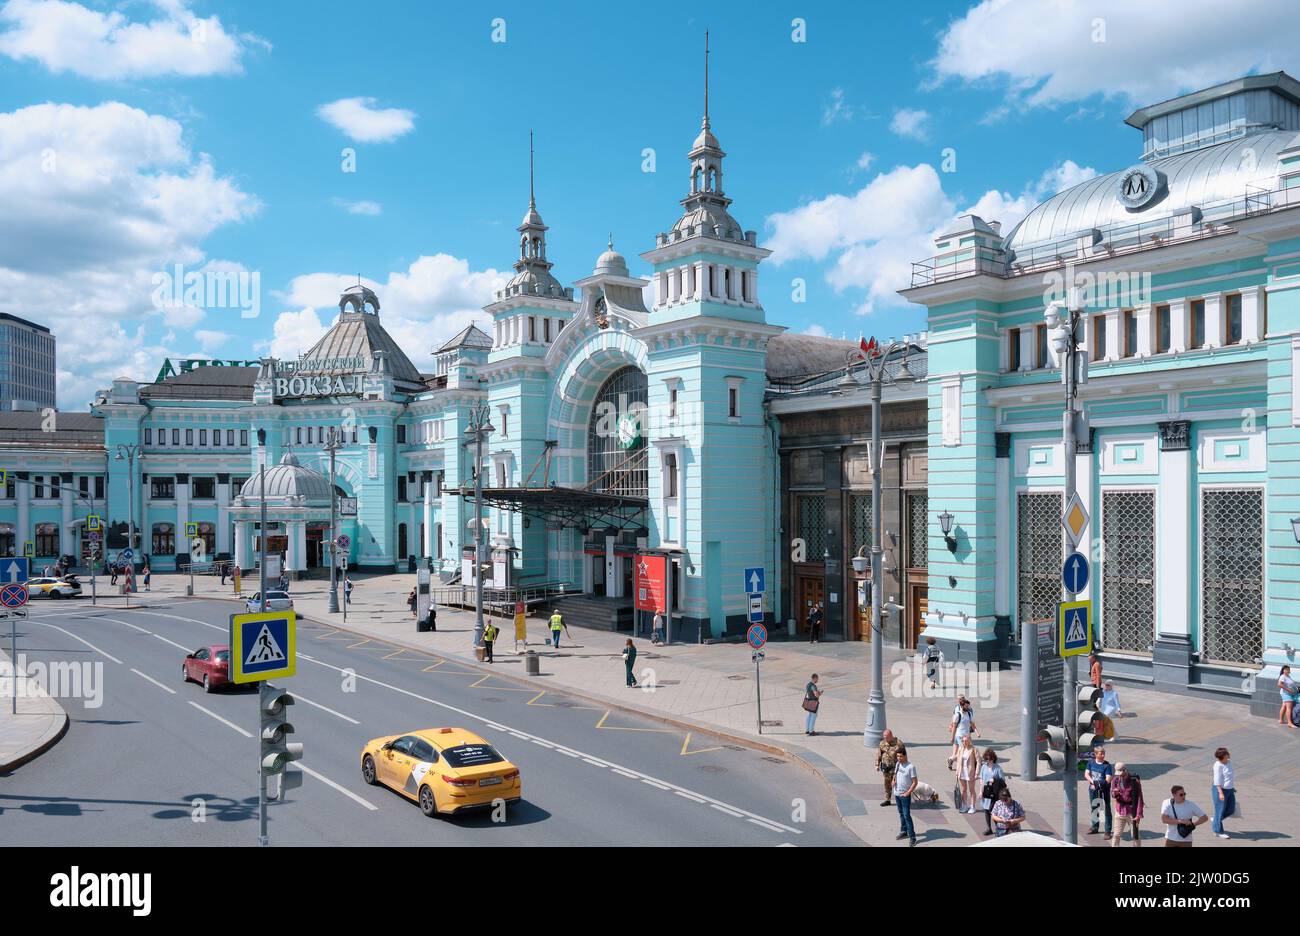 Tverskaya Zastava Square, the old building of Belorussky Railway Station, built in 1870, landmark: Moscow, Russia - July 22, 2022 Stock Photo